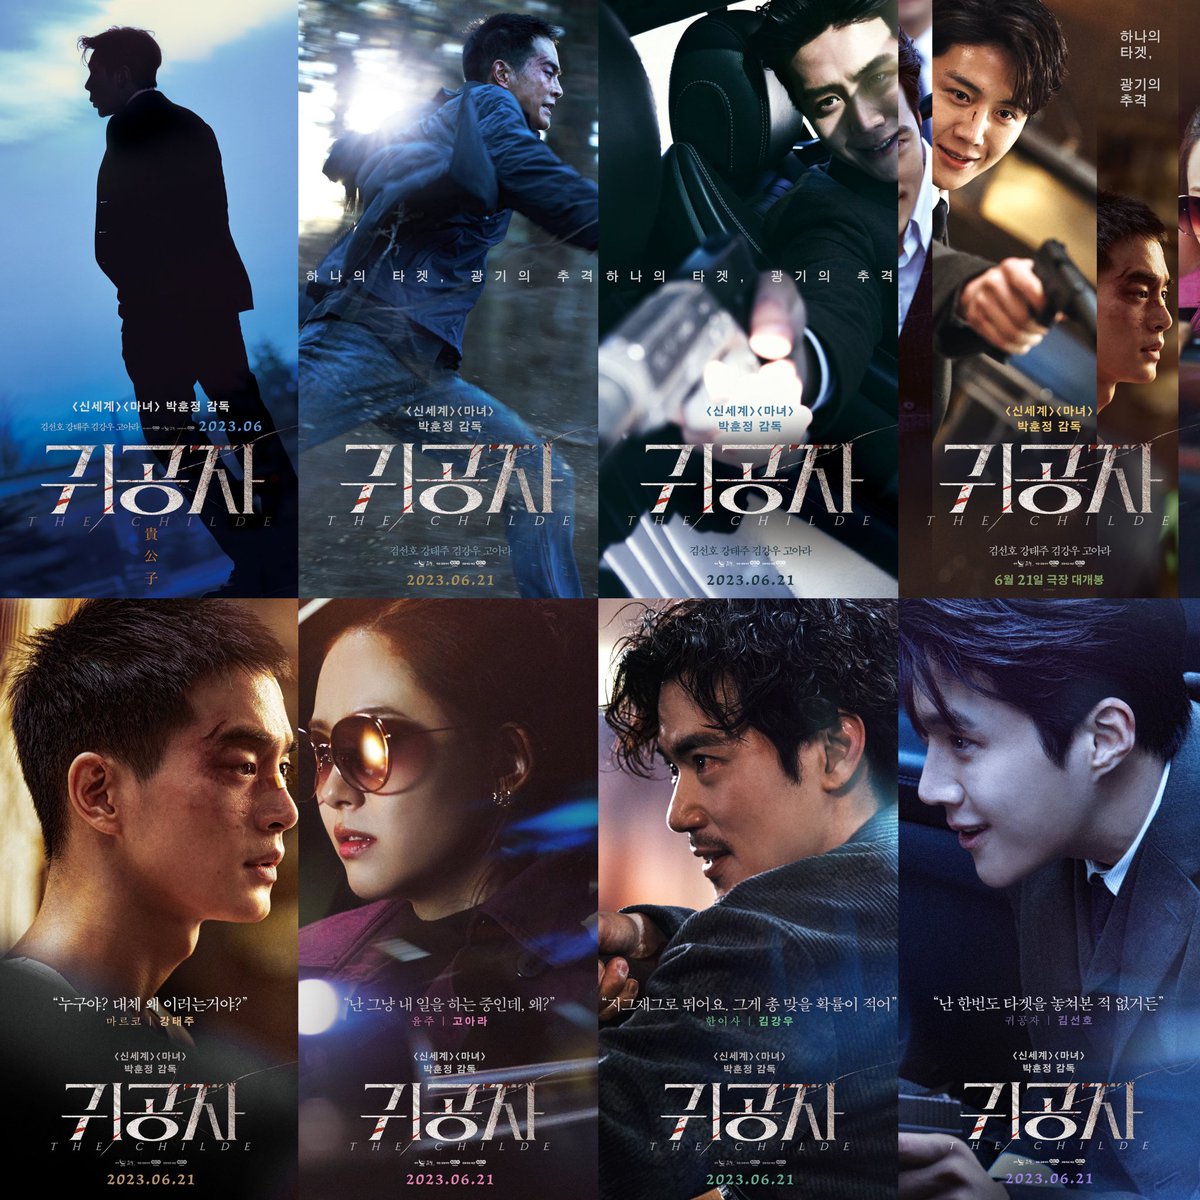 Upcoming Korean Movie THE CHILDE, starring Kim Seon-Ho, Kang Tae-Joo, Go Ara, and Kim Kang-Woo. 

These are the posters of the said movie, premiere on June 21.

#thechilde #kimseonho #goara #kangtaejoo #kimkangwoo